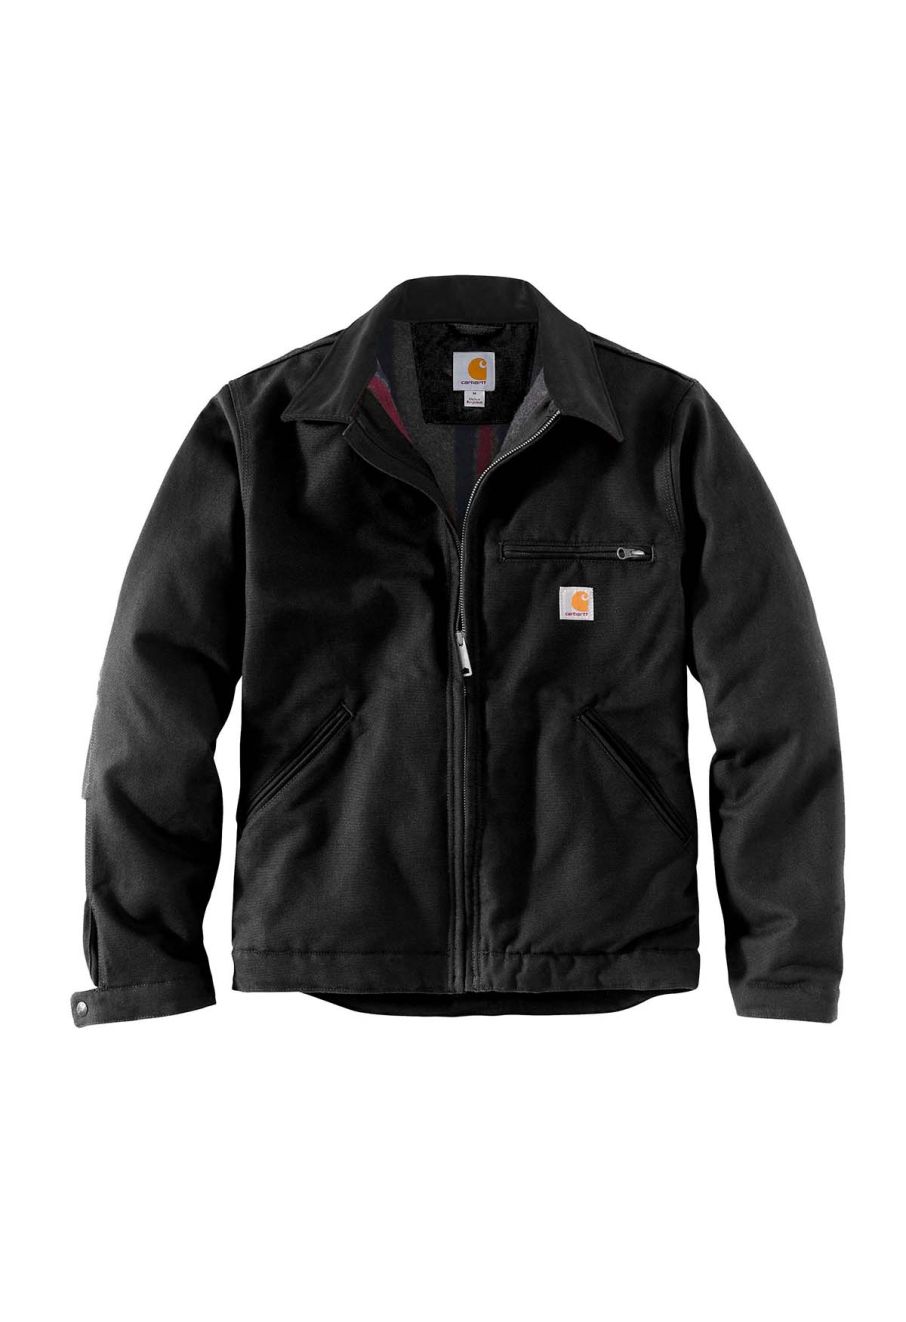 Carhartt Workwear 103828 Duck Detroit Jacket